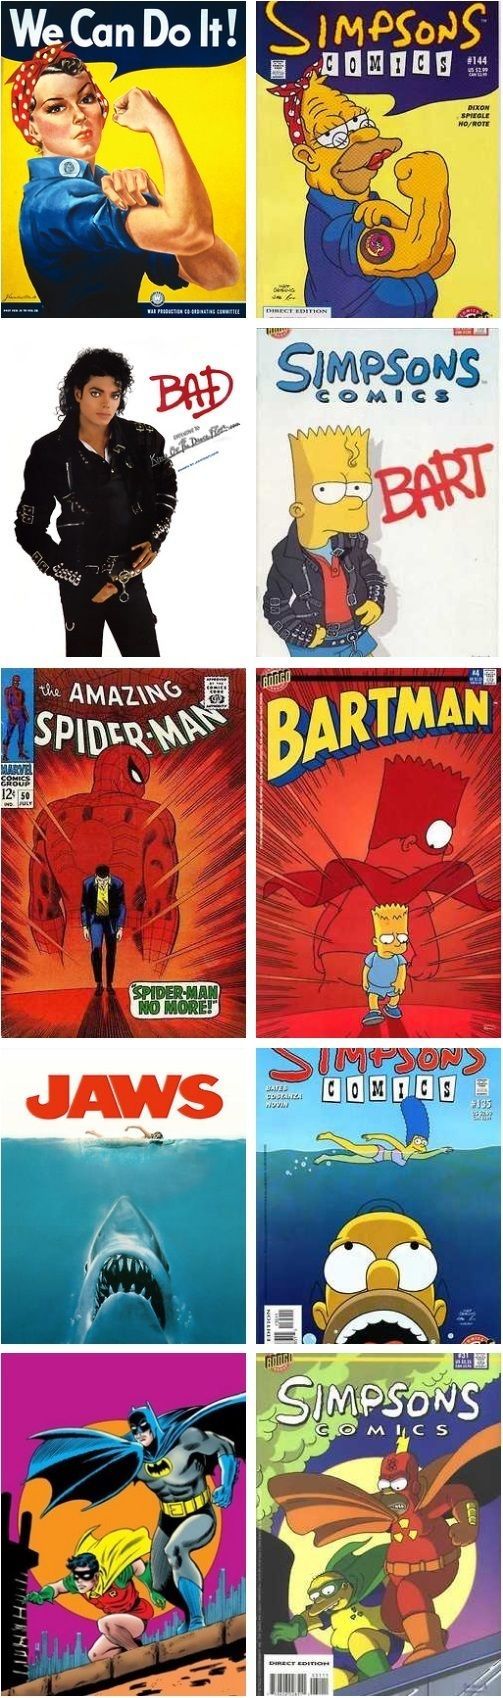 Simpsons poster parodies - The Simpsons, Comics, Parody, Longpost